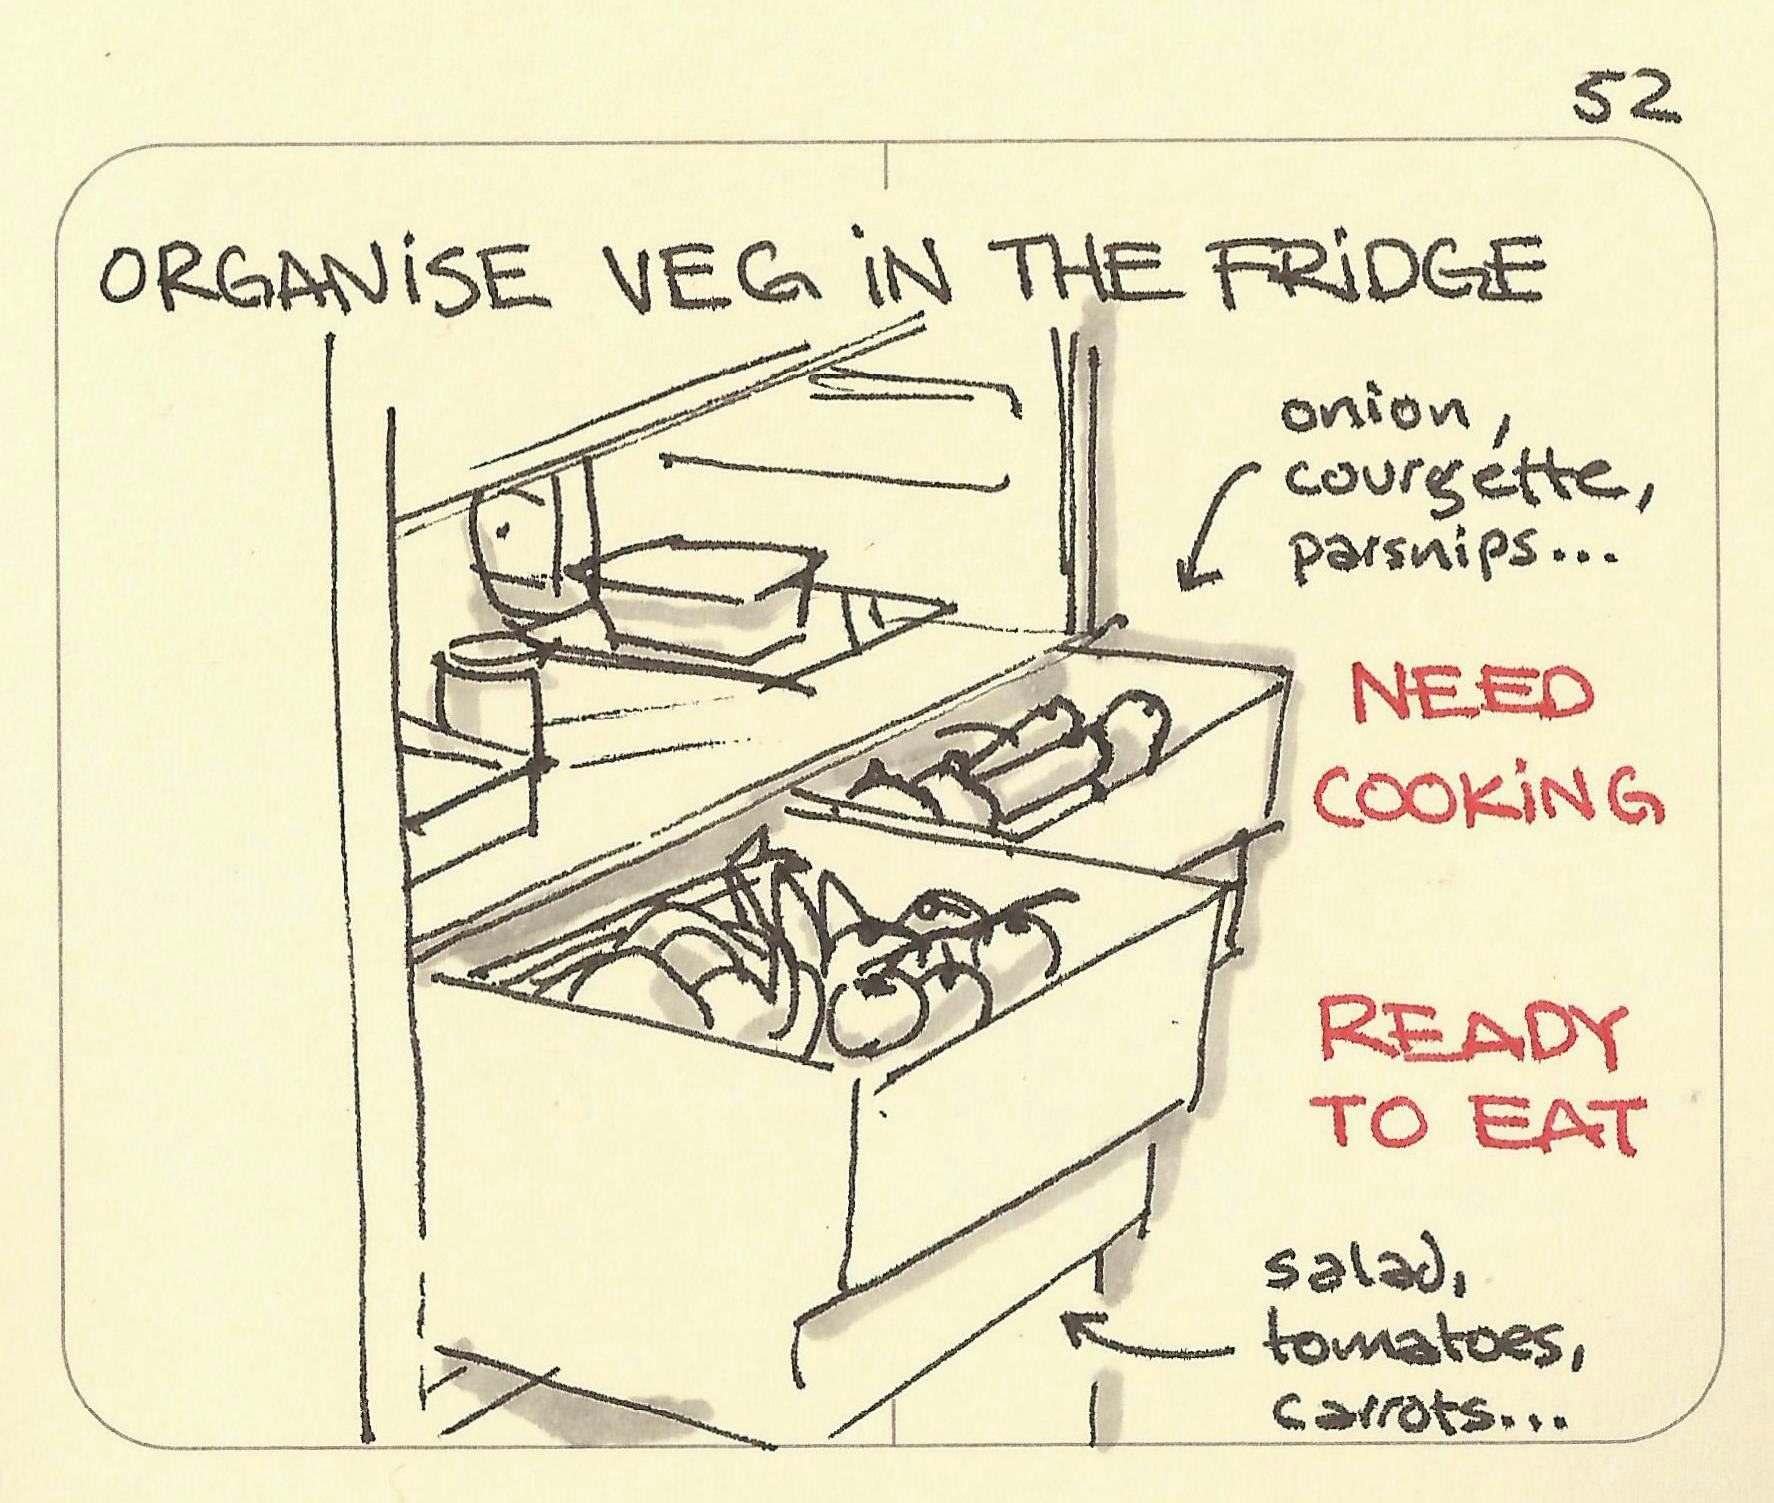 Organise veg in the fridge - Sketchplanations